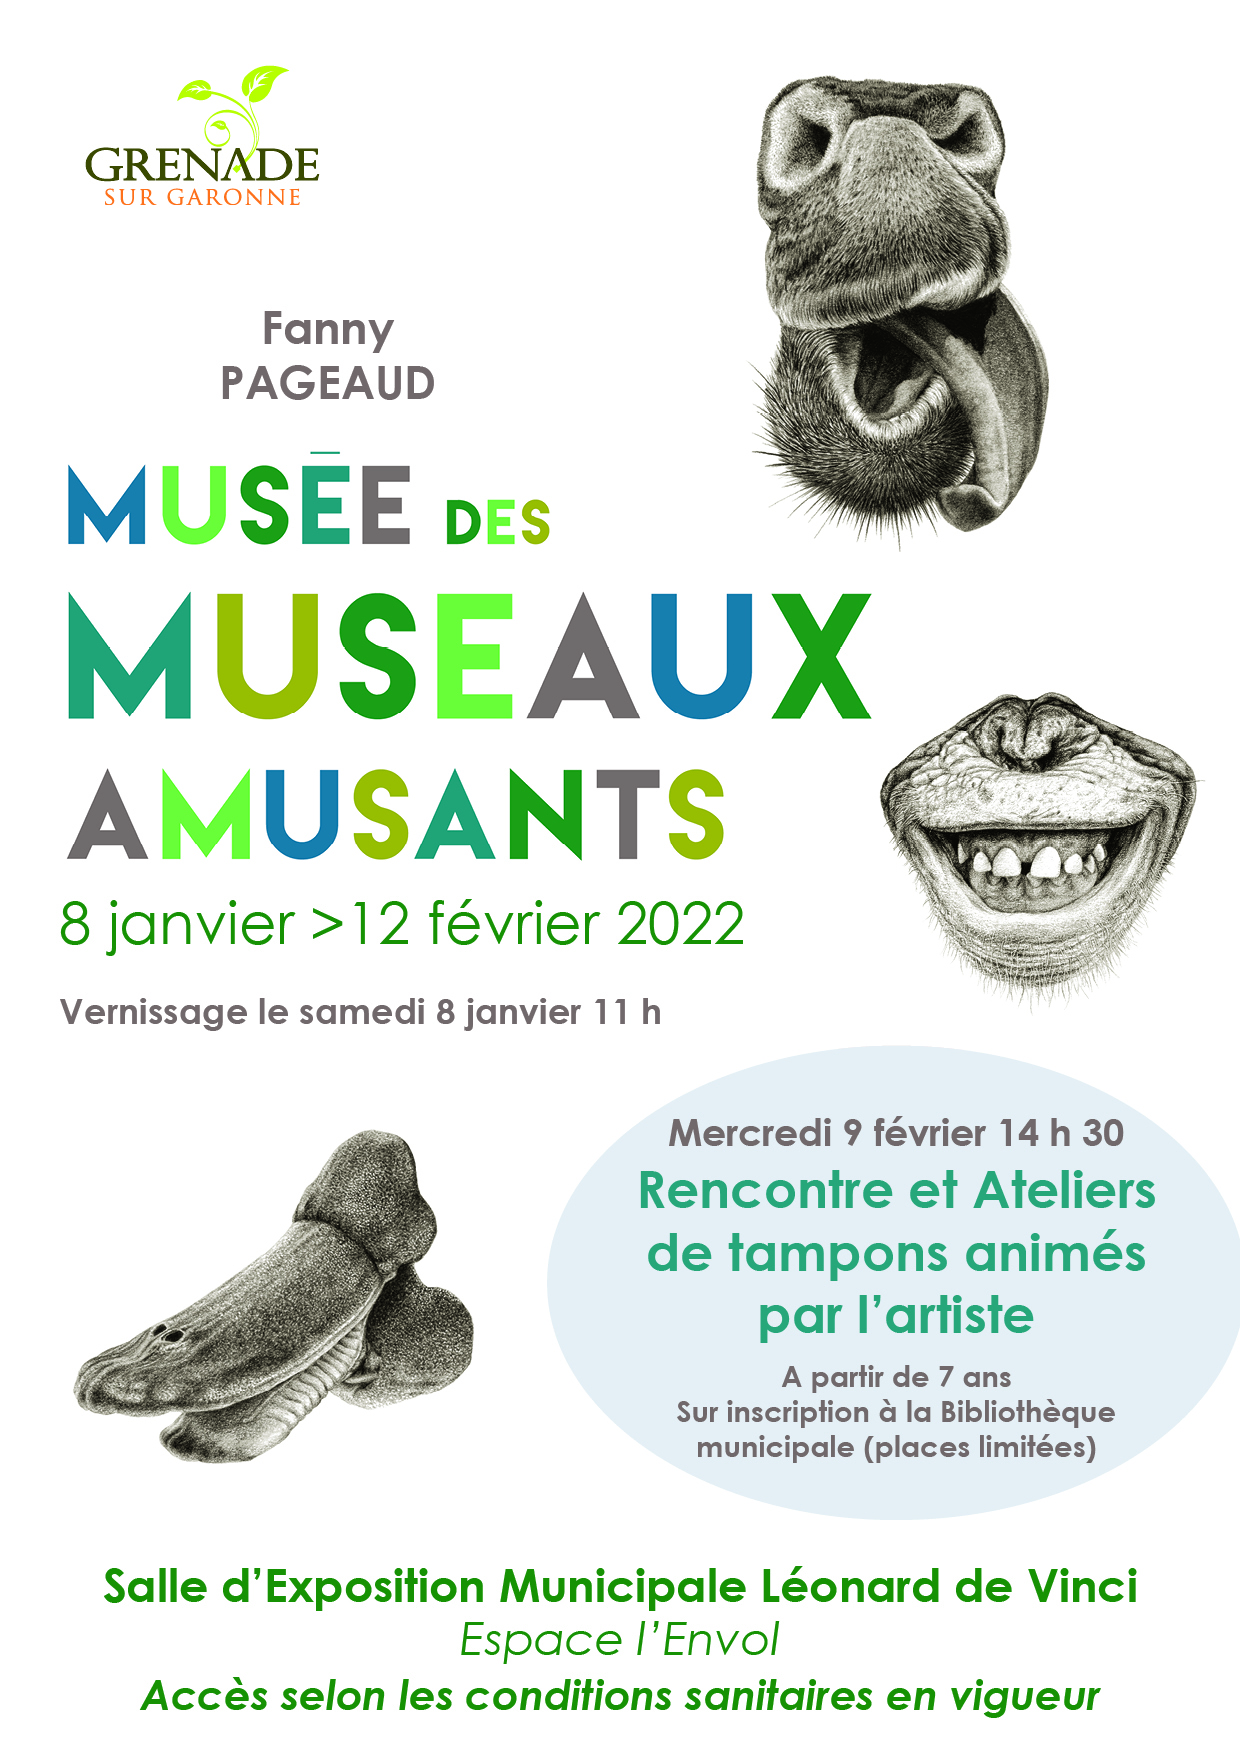 EXPOSITION MUSEE DES MUSEAUX AMUSANTS, GRENADE